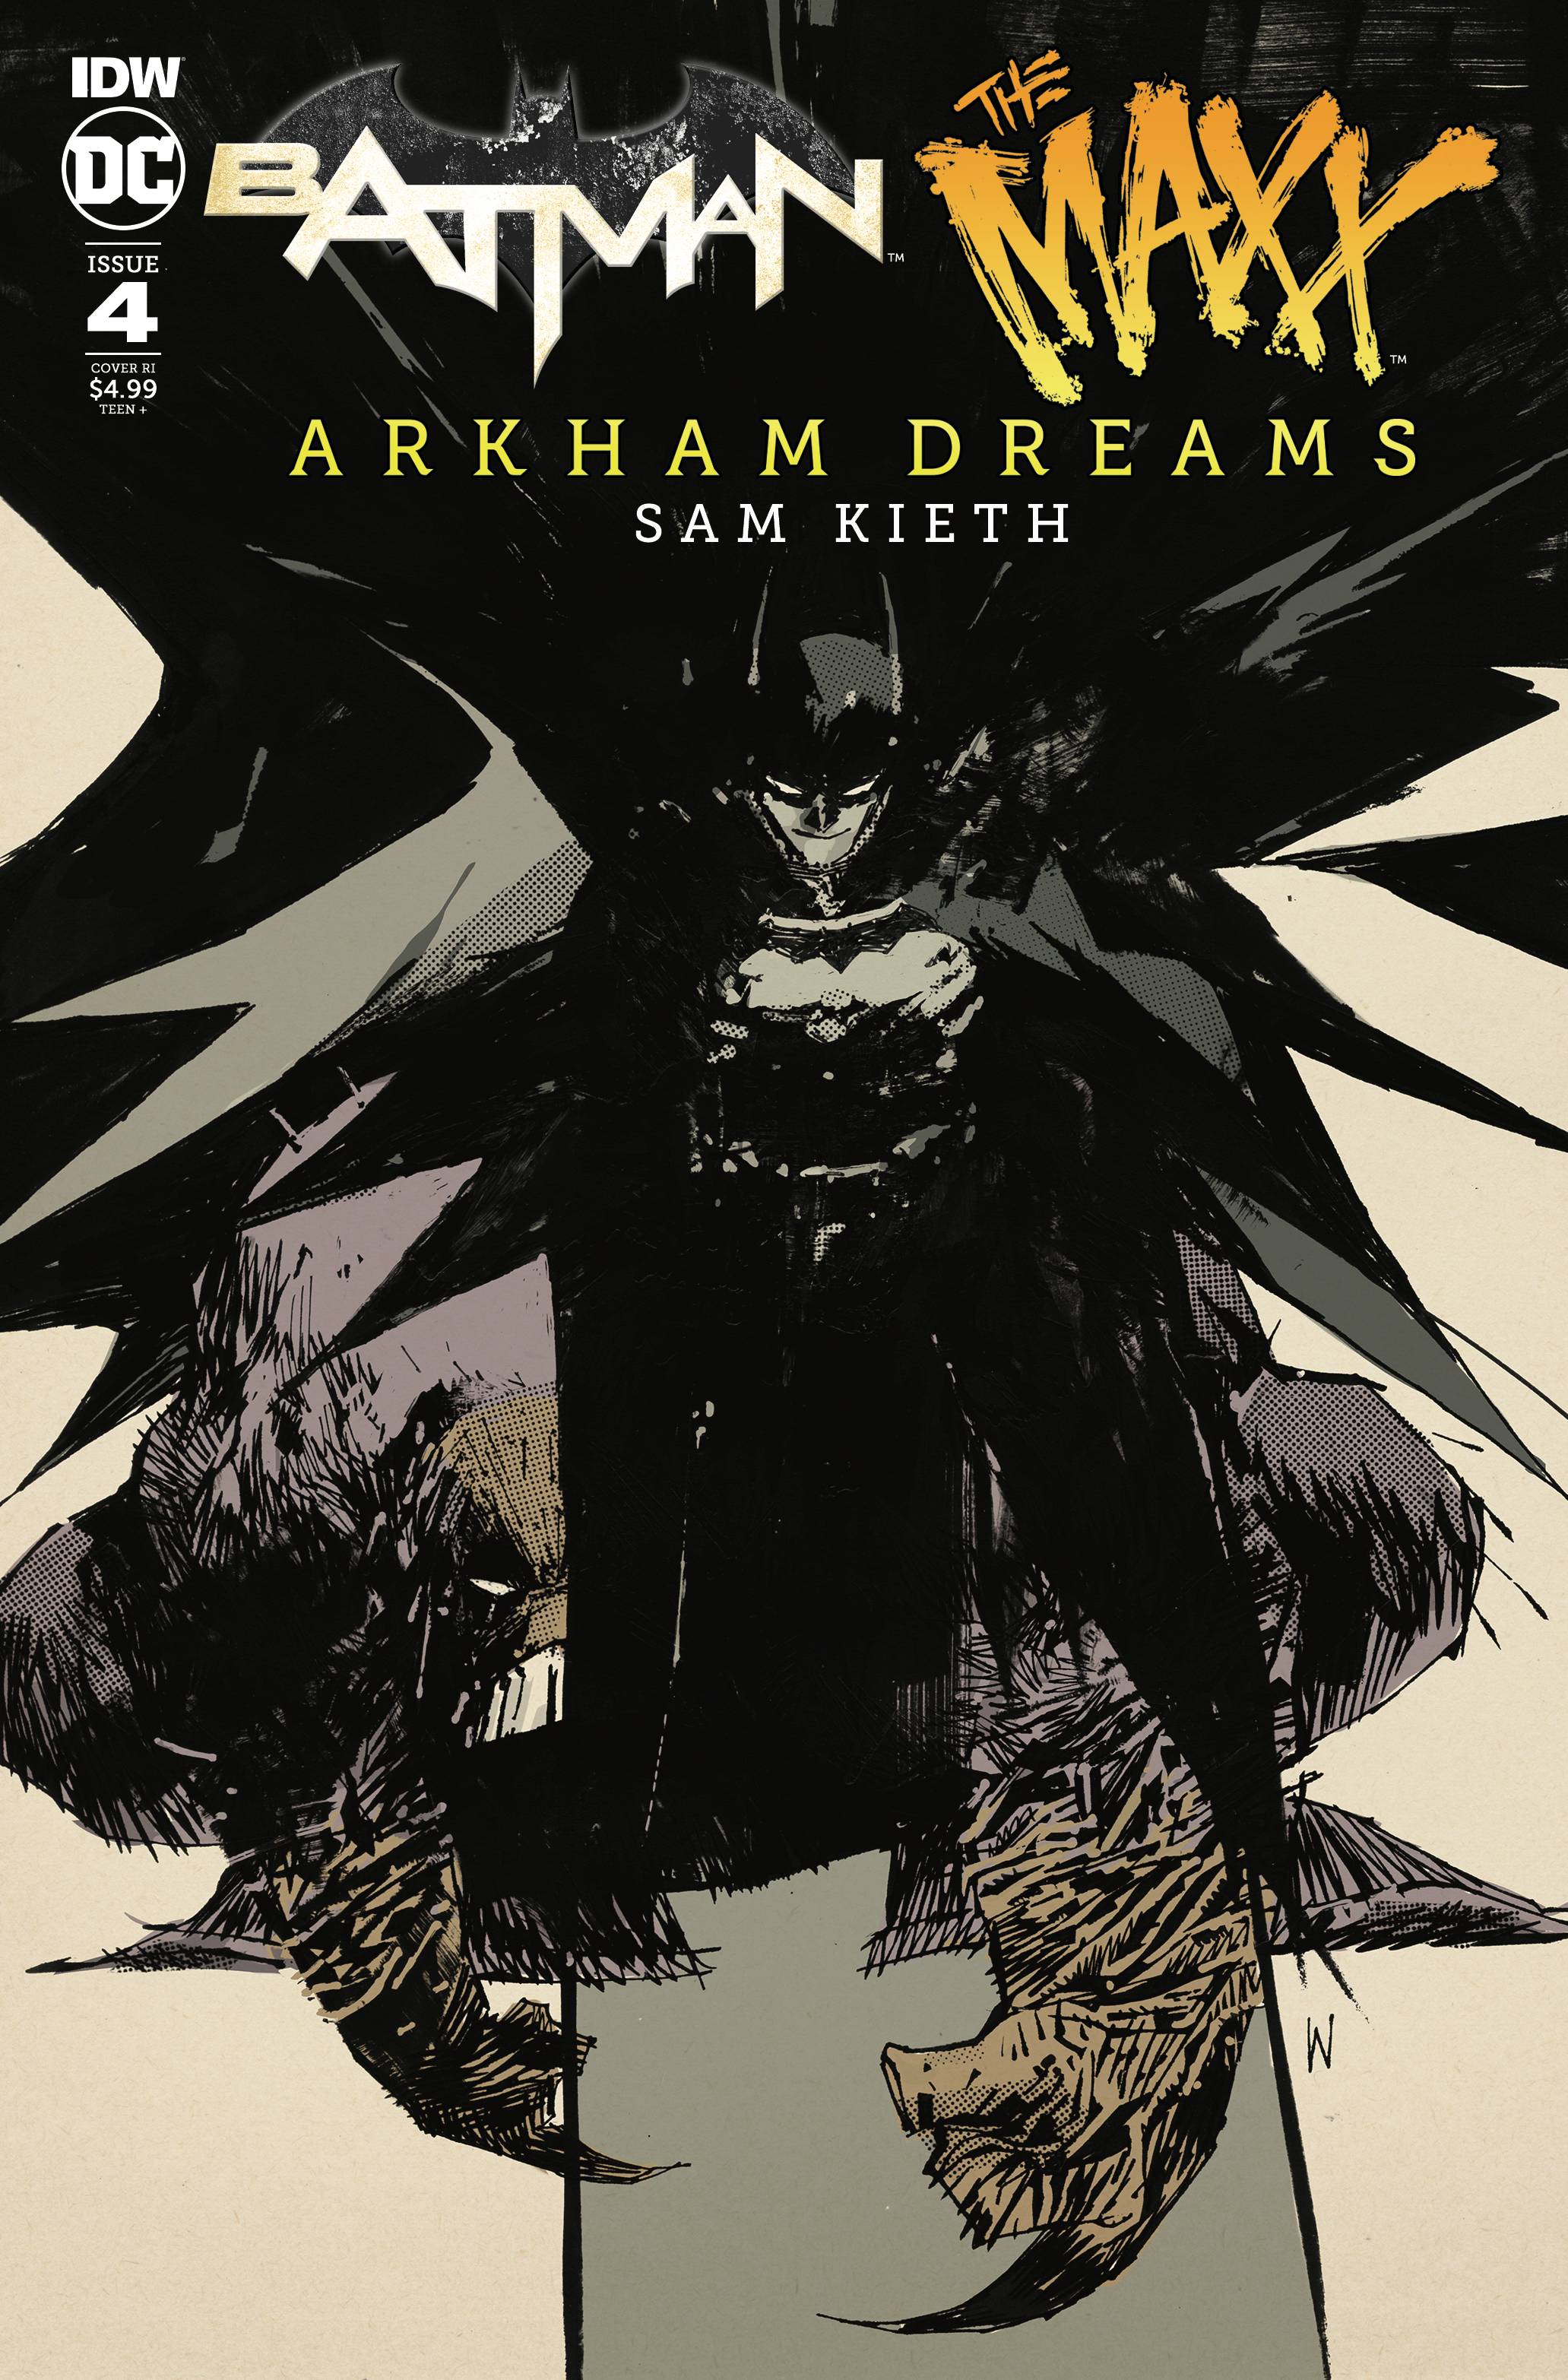 BATMAN THE MAXX ARKHAM DREAMS